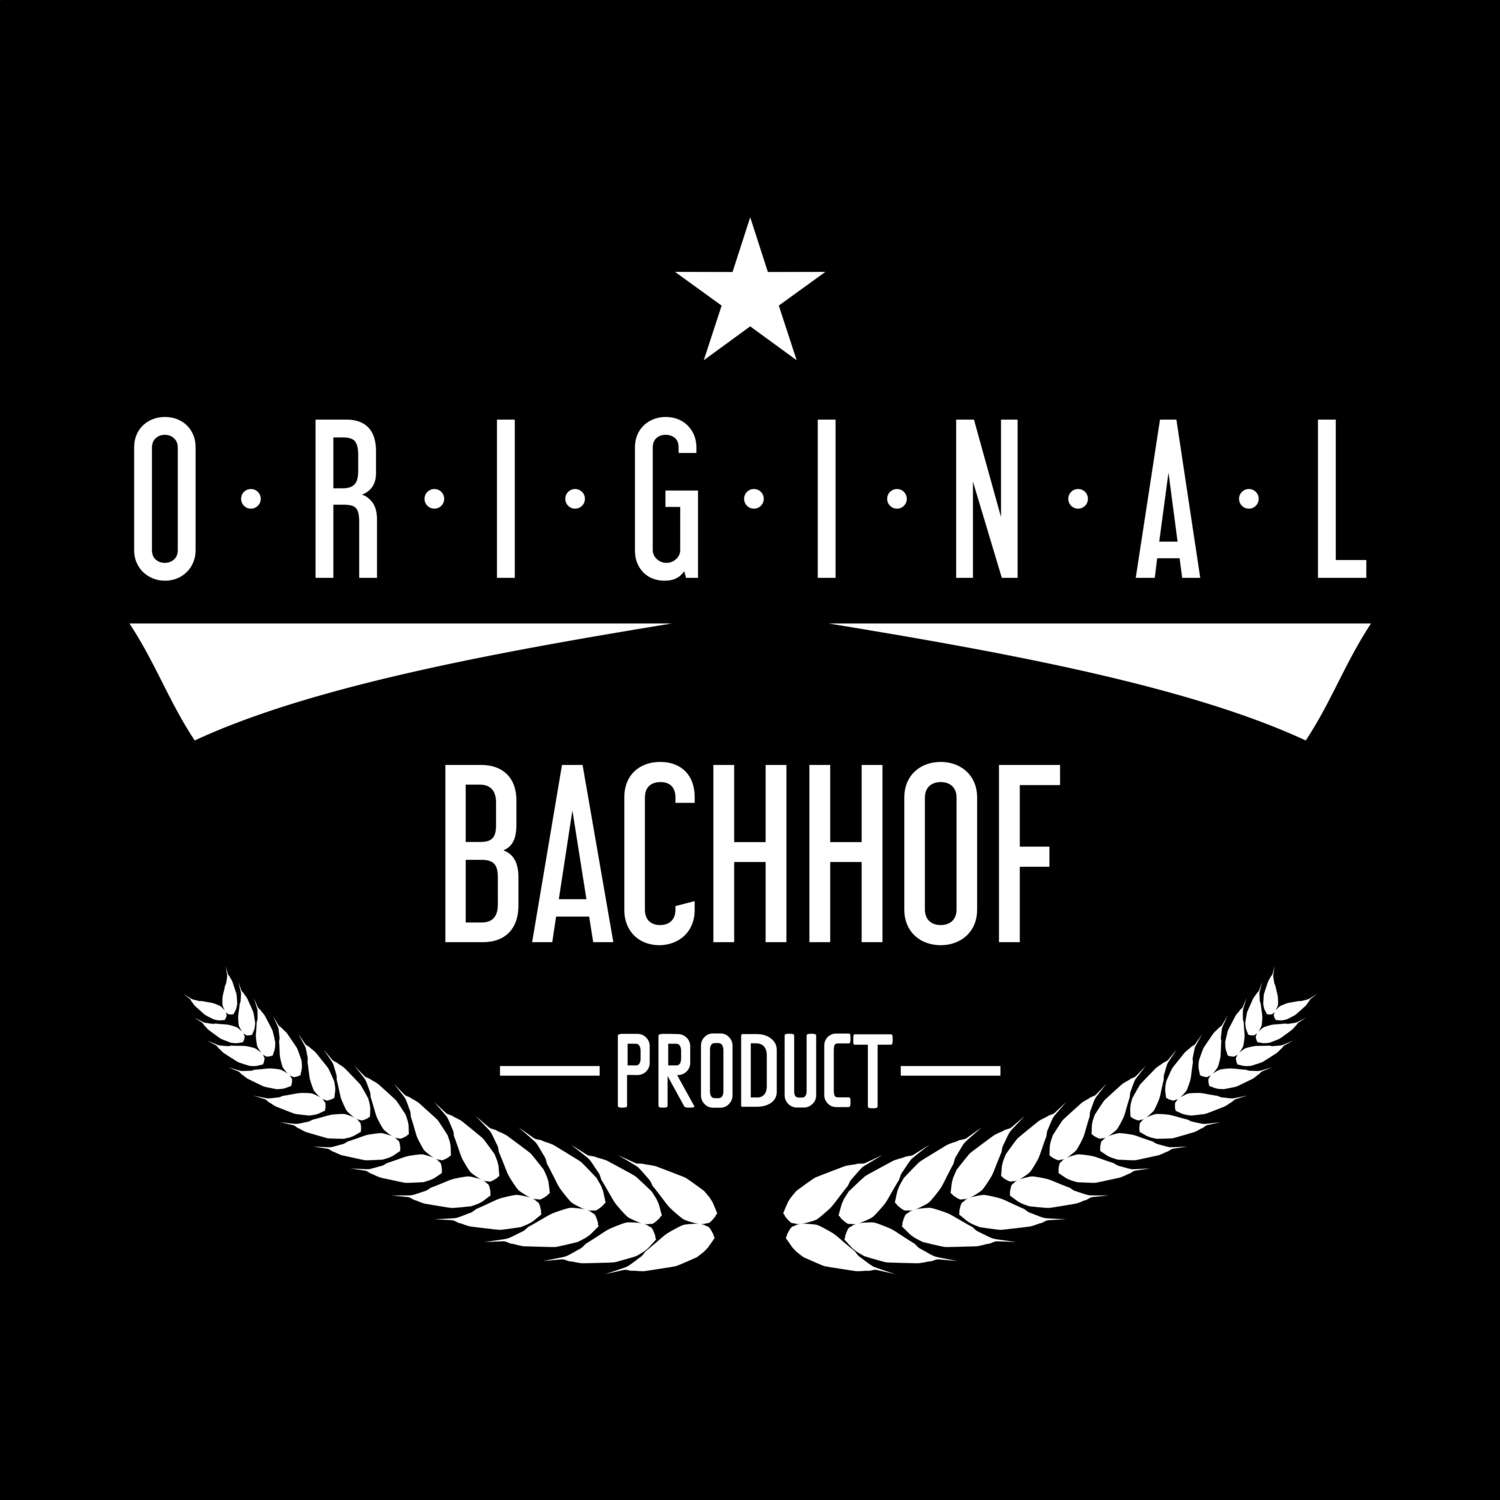 Bachhof T-Shirt »Original Product«